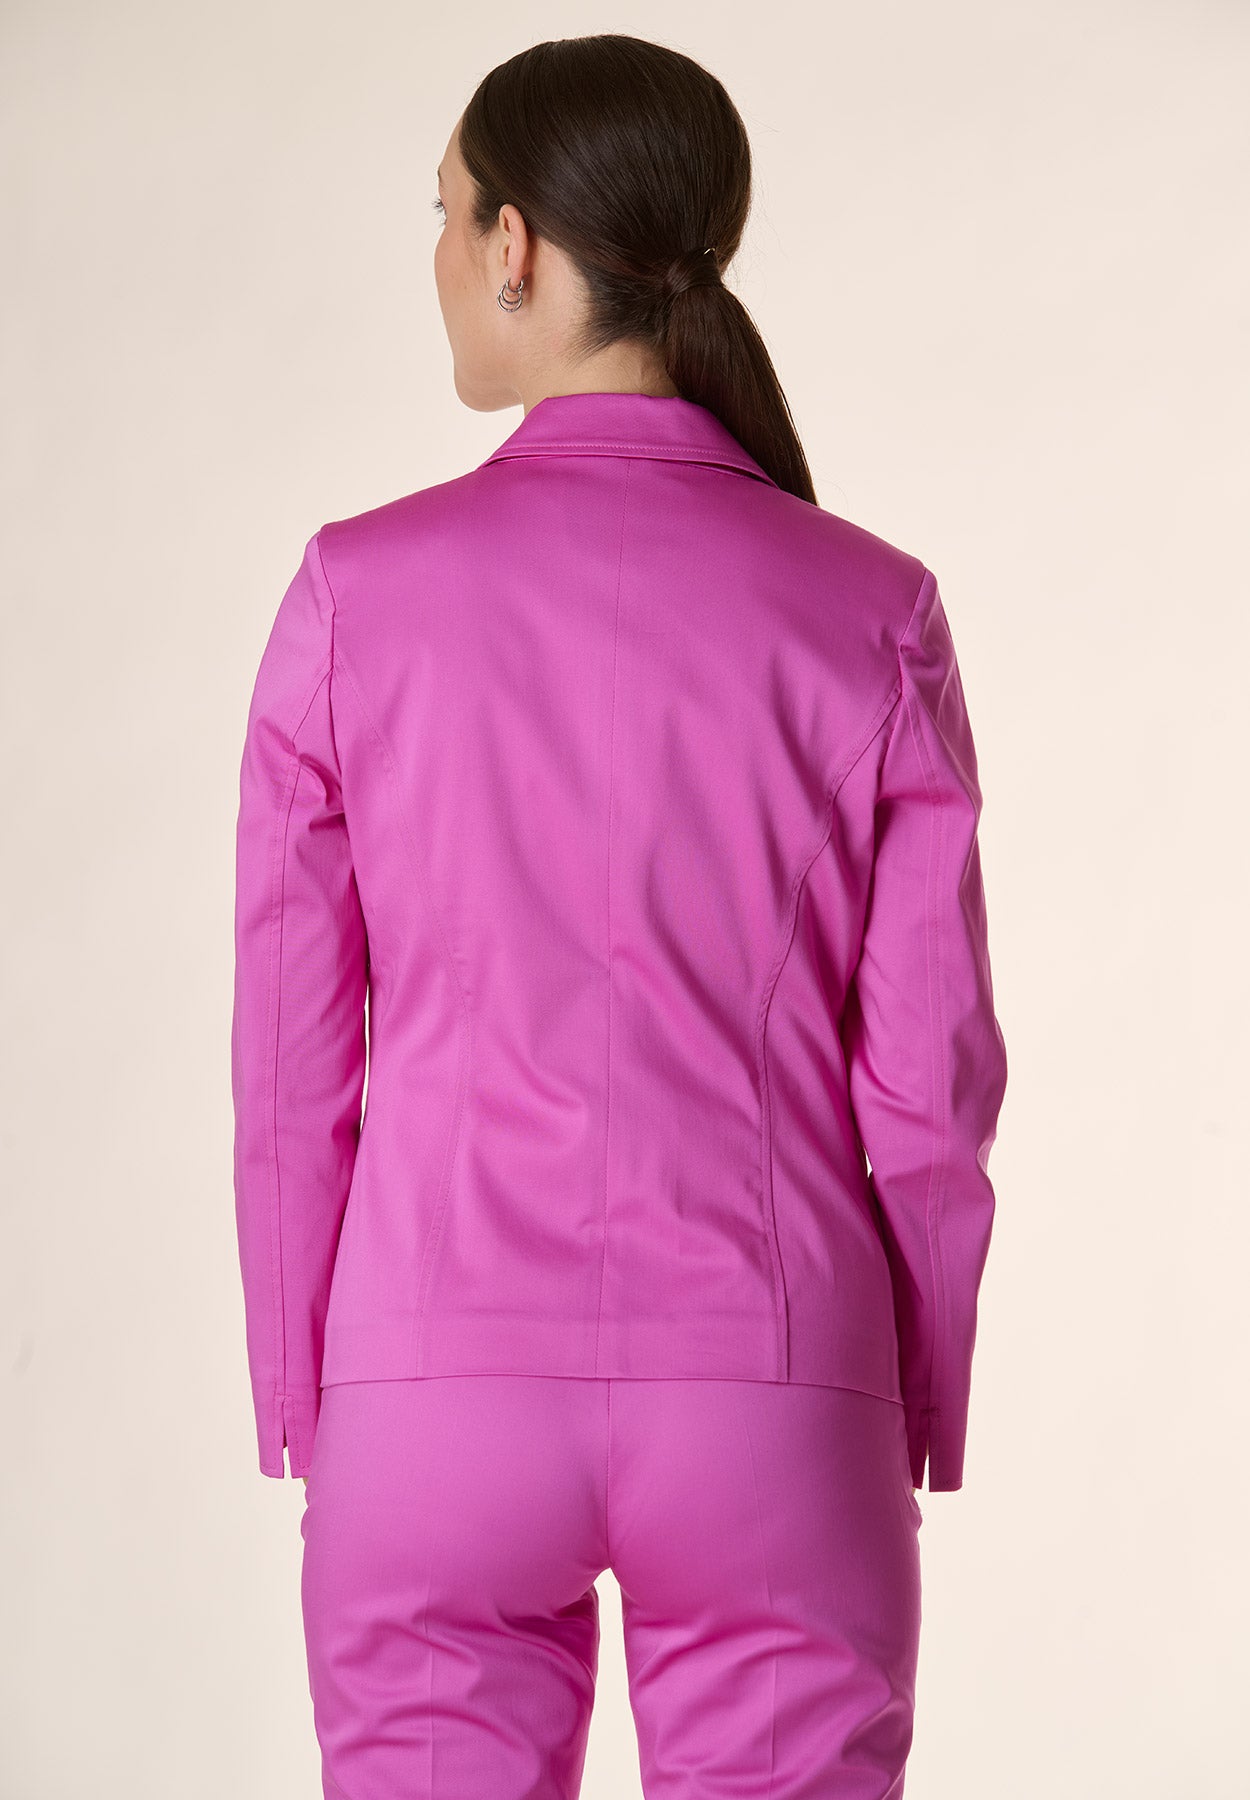 Short single-breasted fuchsia jacket